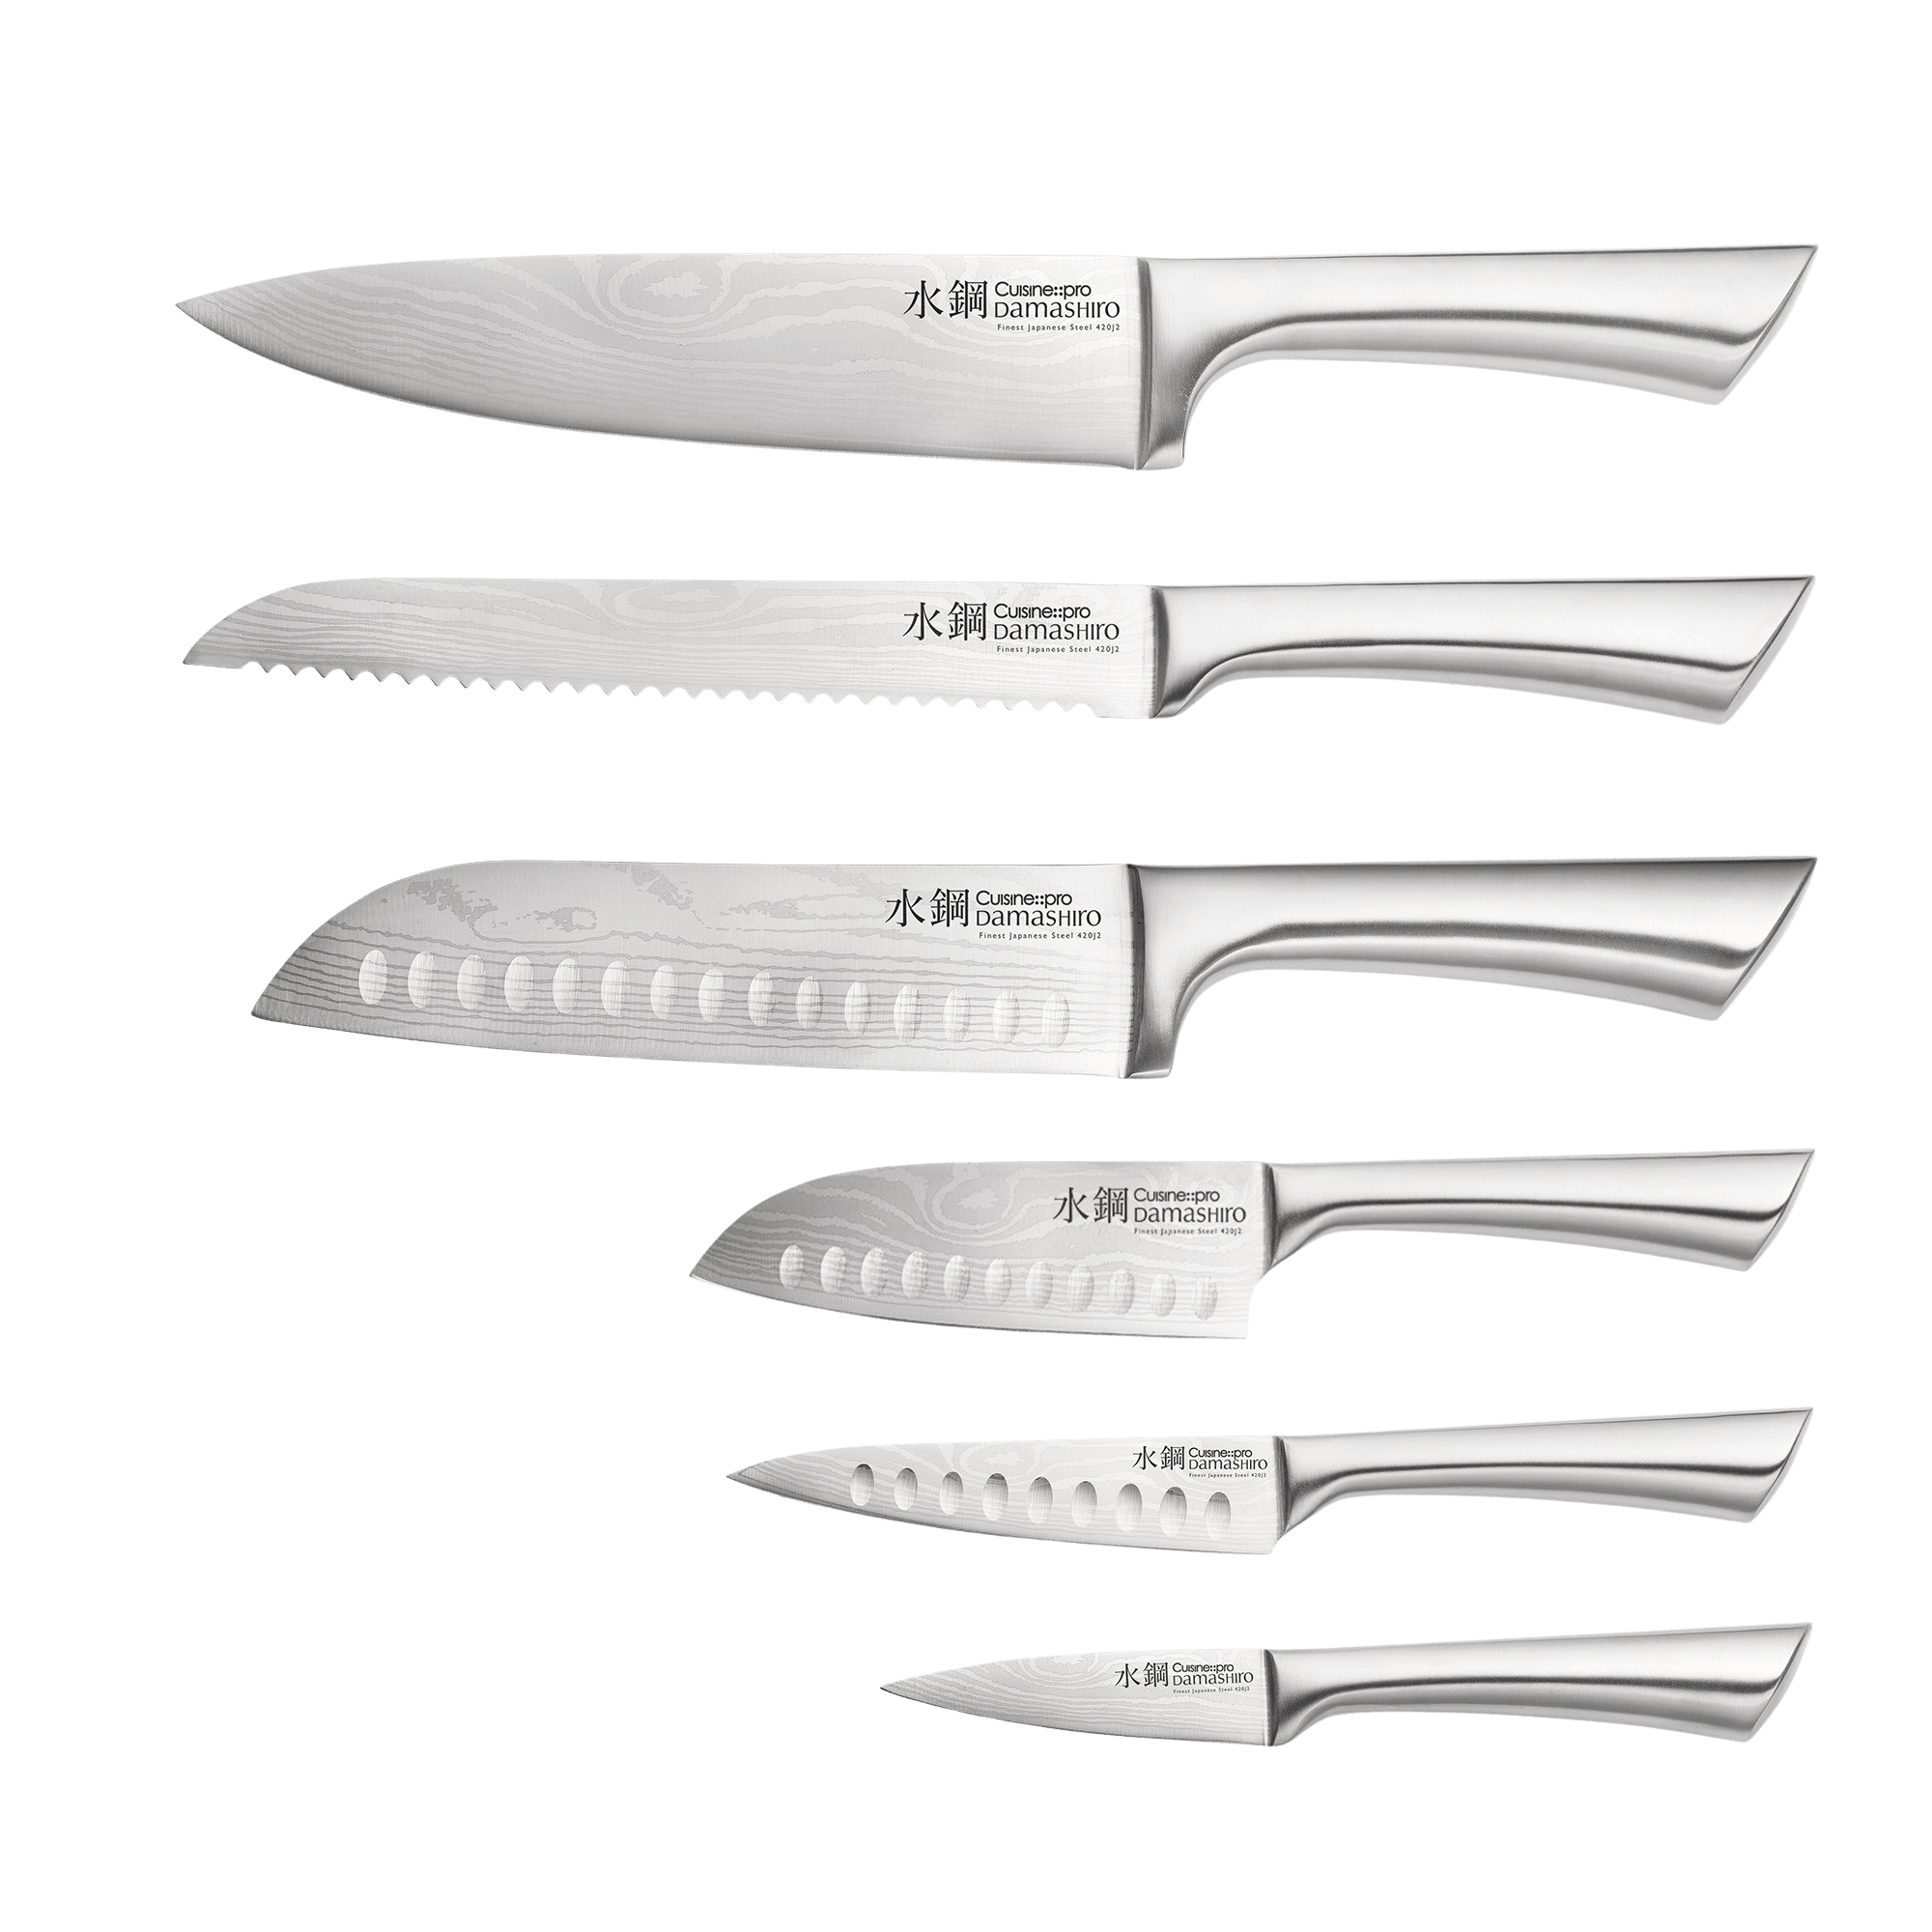 https://cdn.shopify.com/s/files/1/0622/4186/5945/products/1029093-Cuisinepro-Damashiro-7-Piece-Kin-Knife-Block-01-min.png?v=1645750419&width=2000